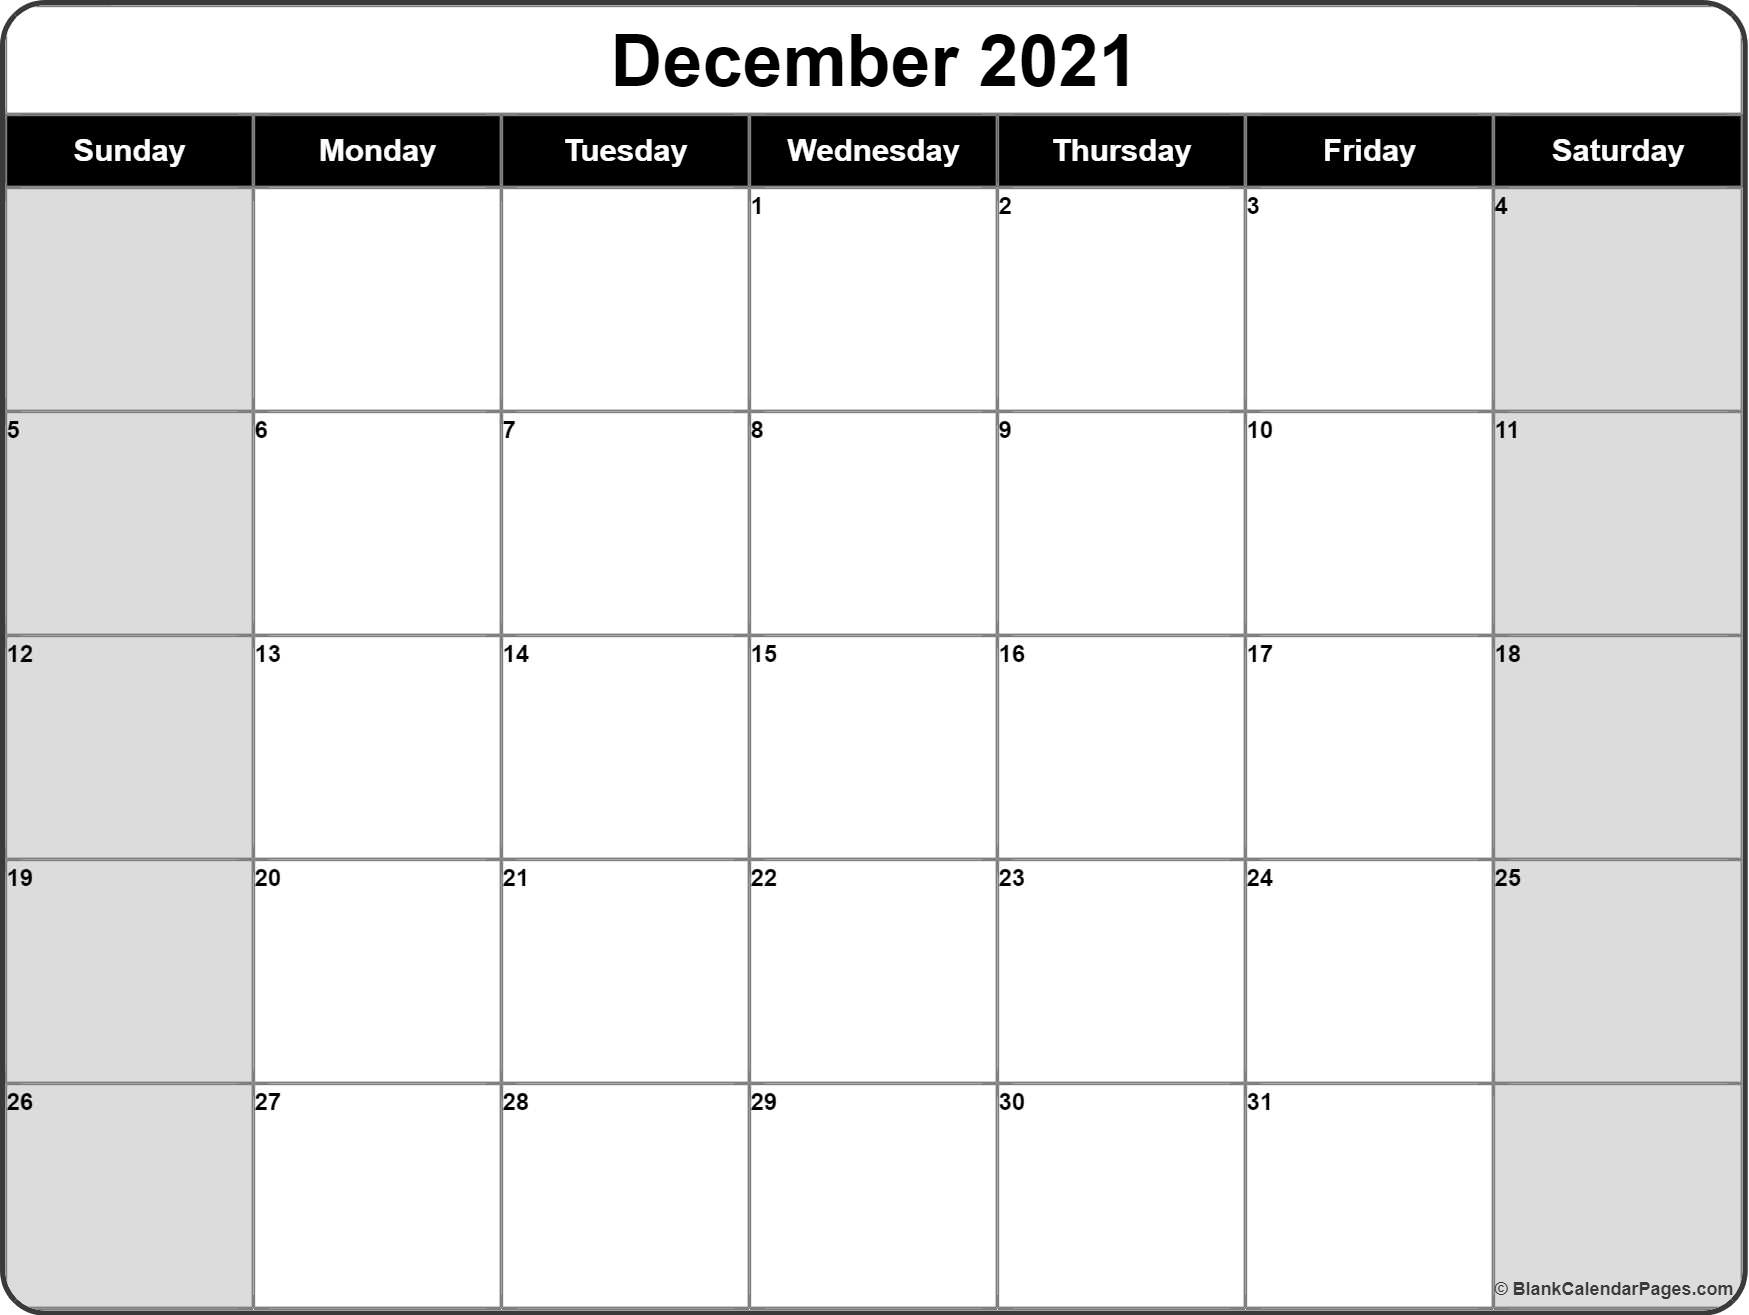 December 2021 Calendar | Free Printable Calendar Templates 2021 Monthly Calendar January To December 2021 Calendar Printable